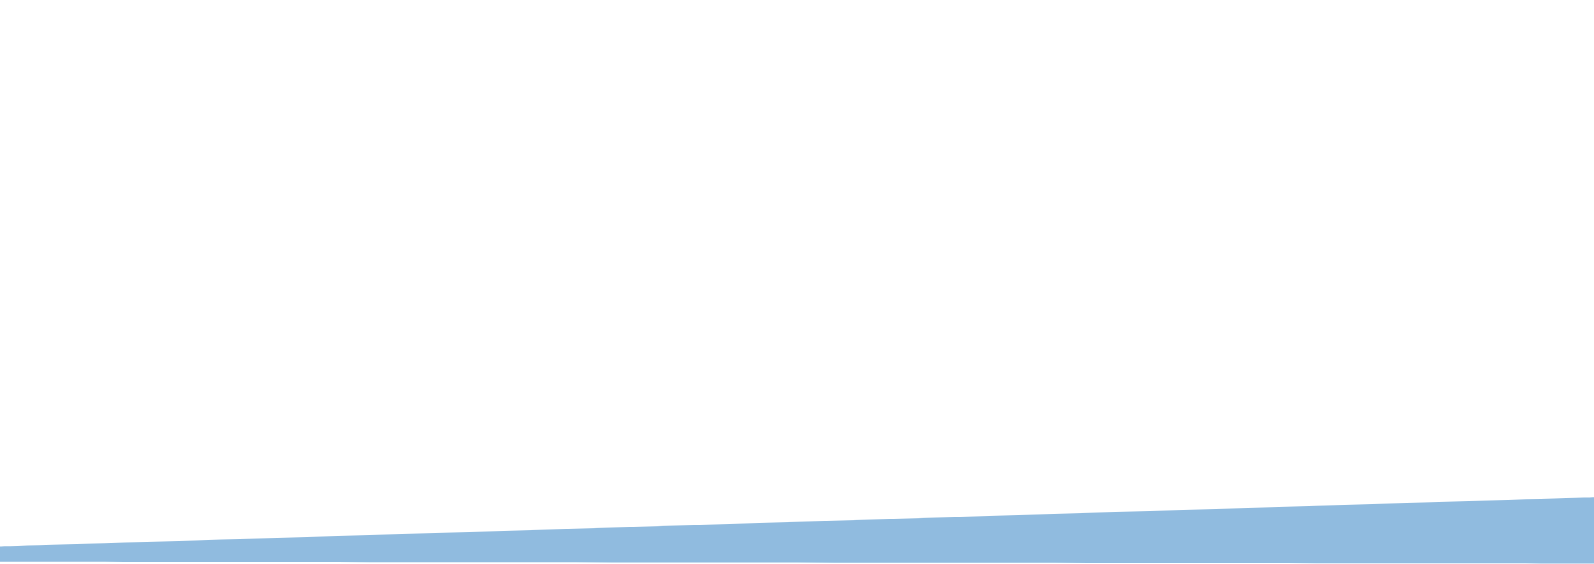 kneat.com logo large for dark backgrounds (transparent PNG)